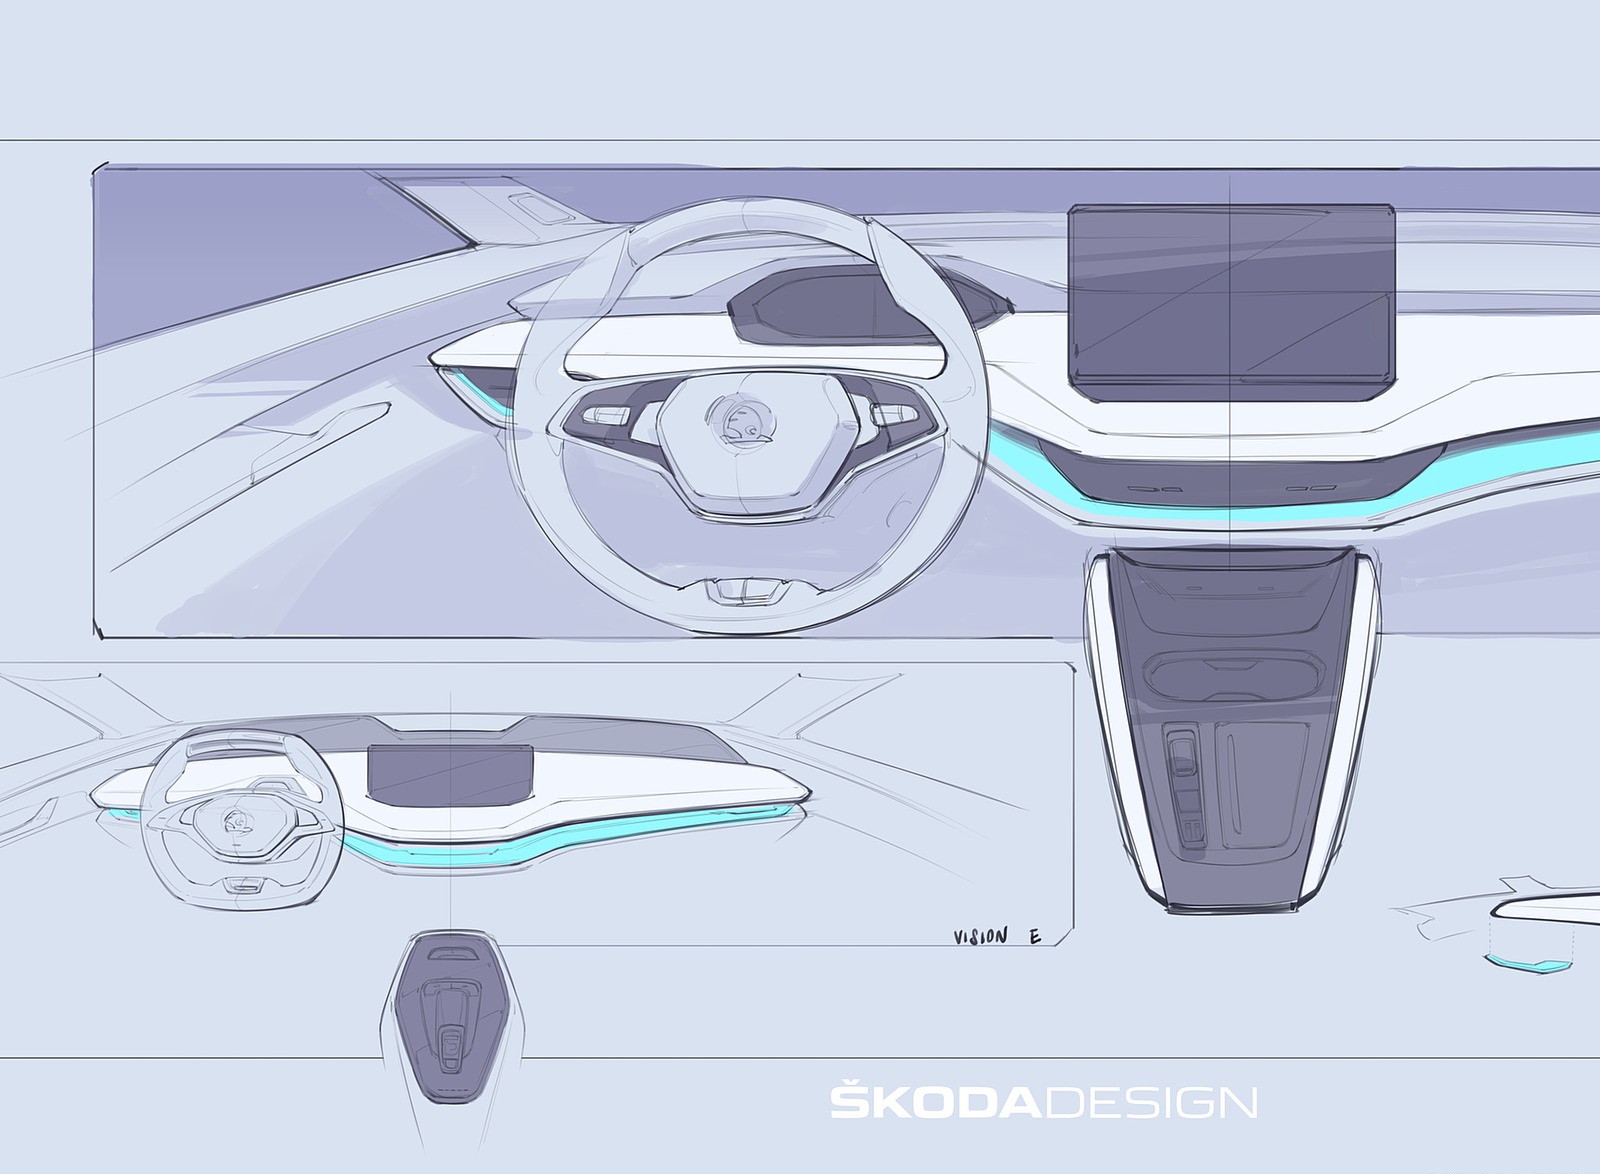 2021 Škoda ENYAQ iV Design Sketch Wallpapers  #183 of 184